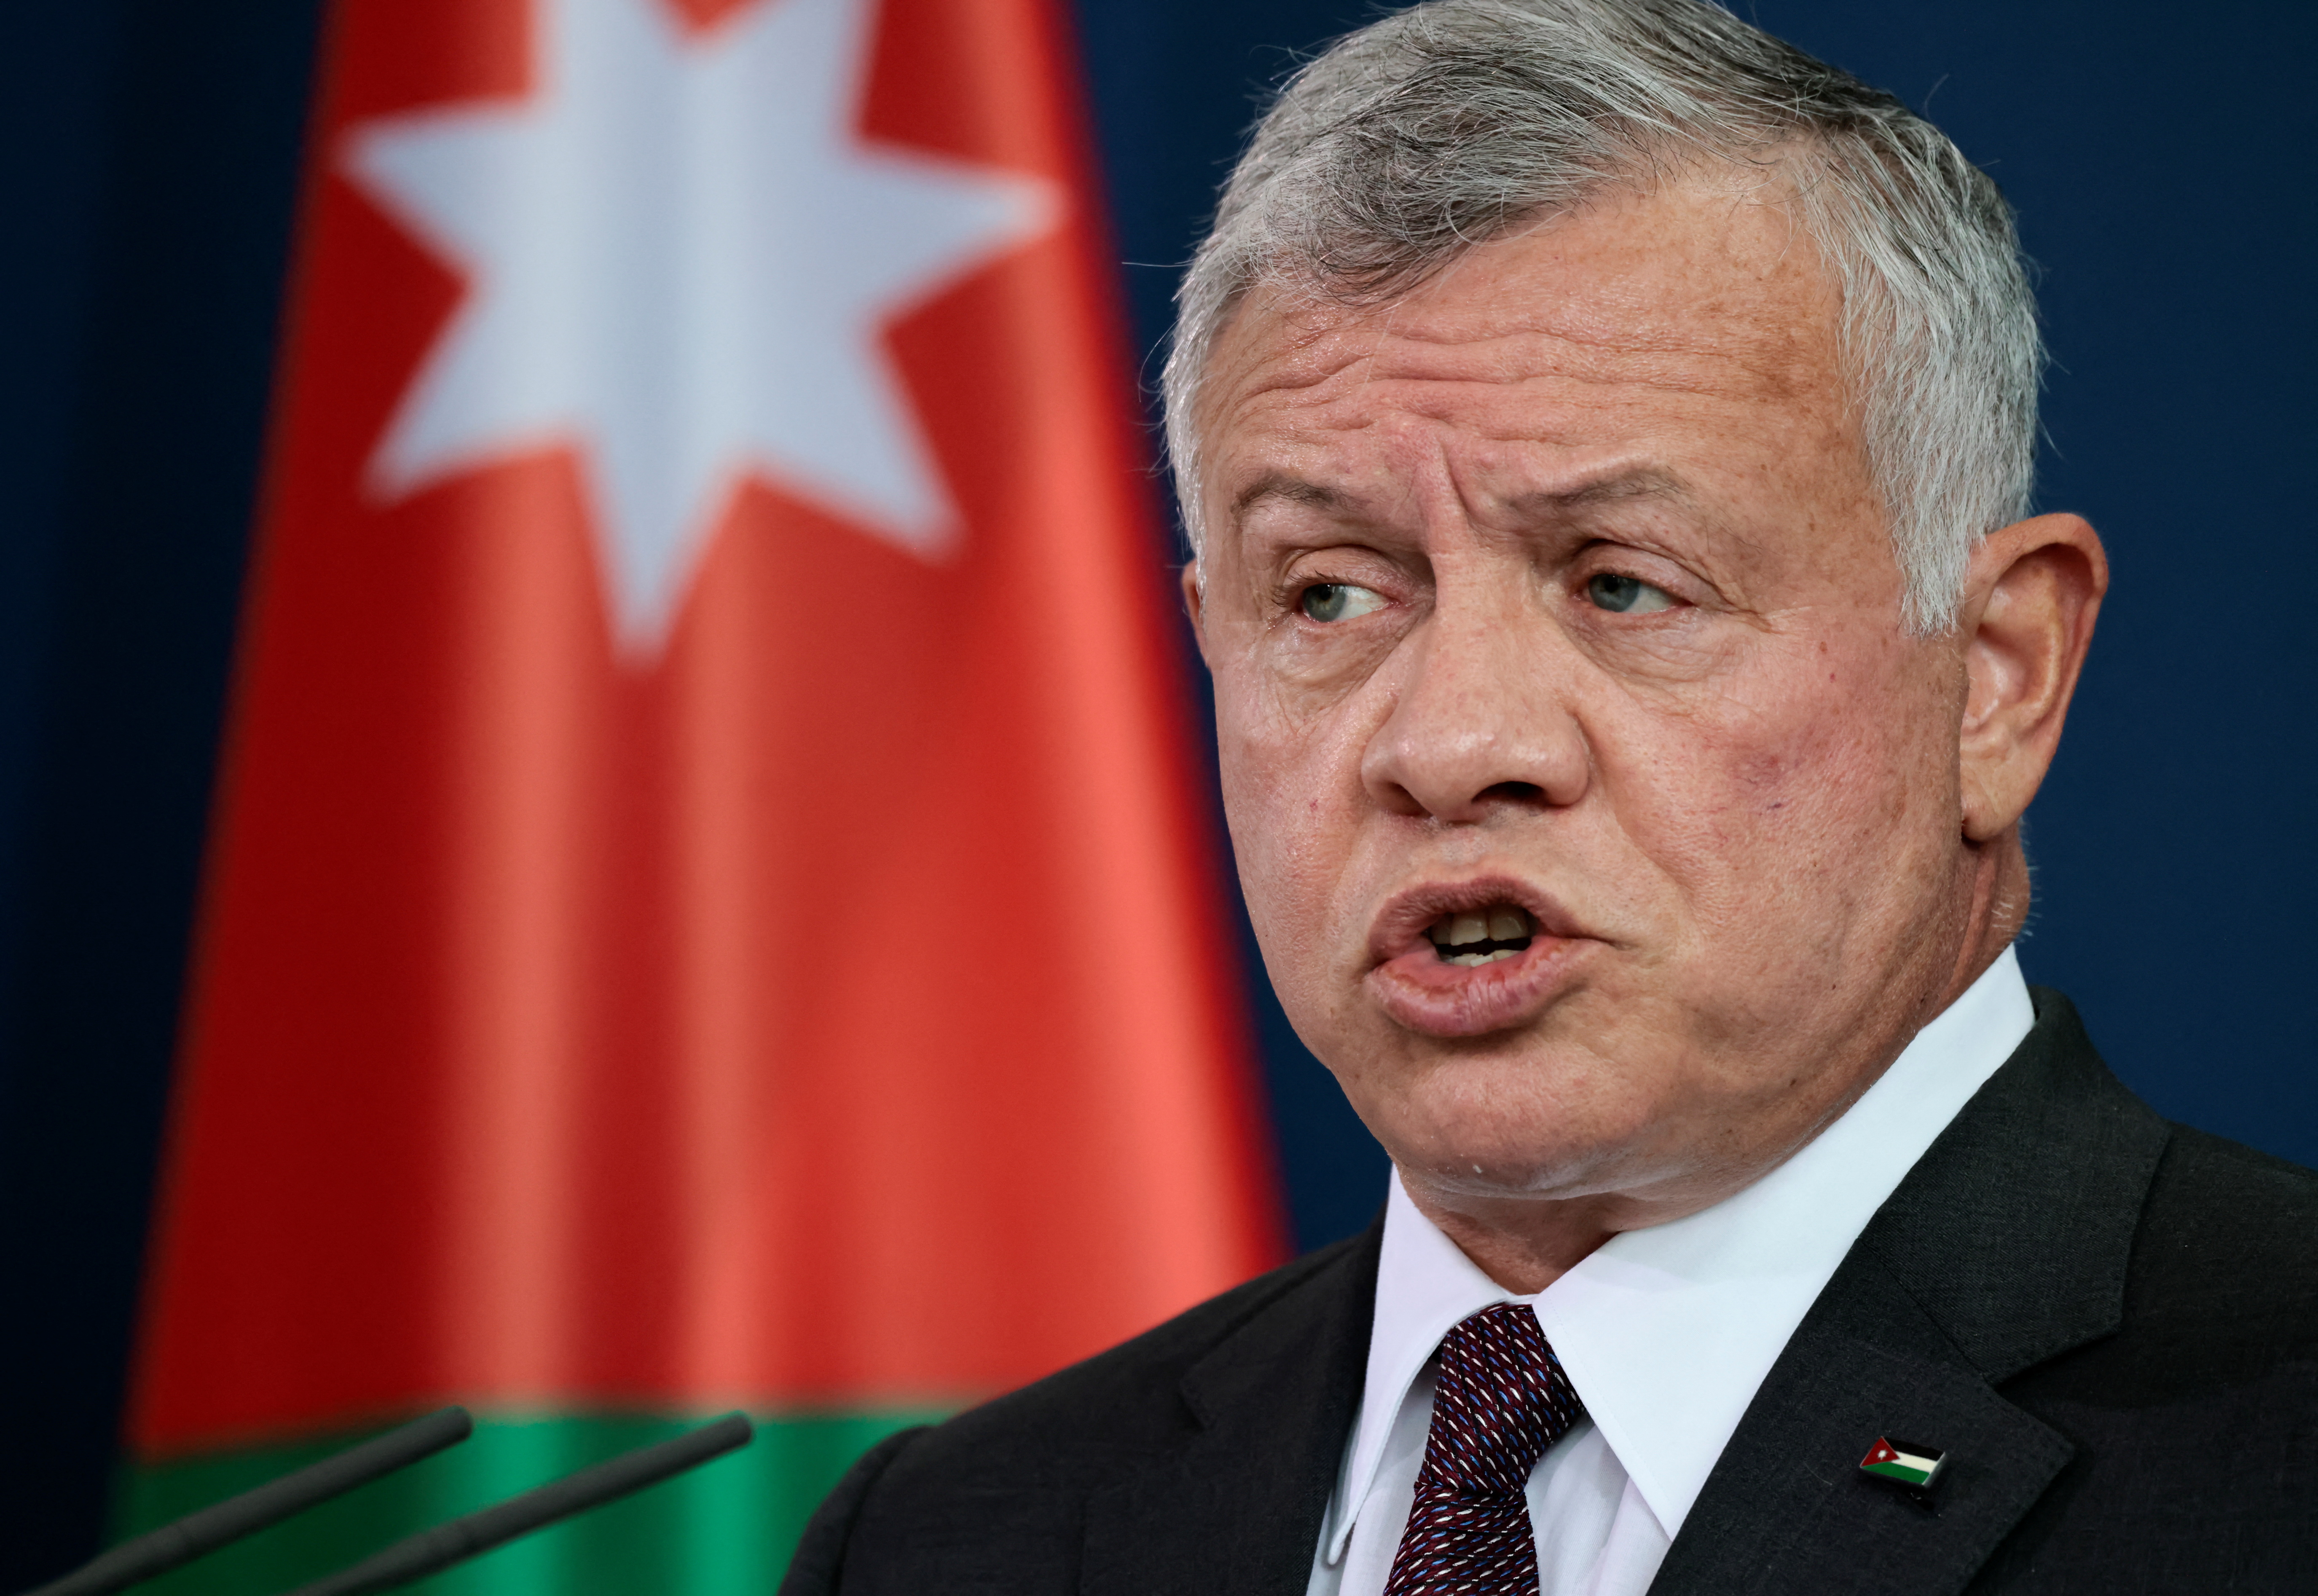 Jordan’s King Abdullah warns Israeli moves in Jerusalem’s Al-Aqsa mosque are threat to peace